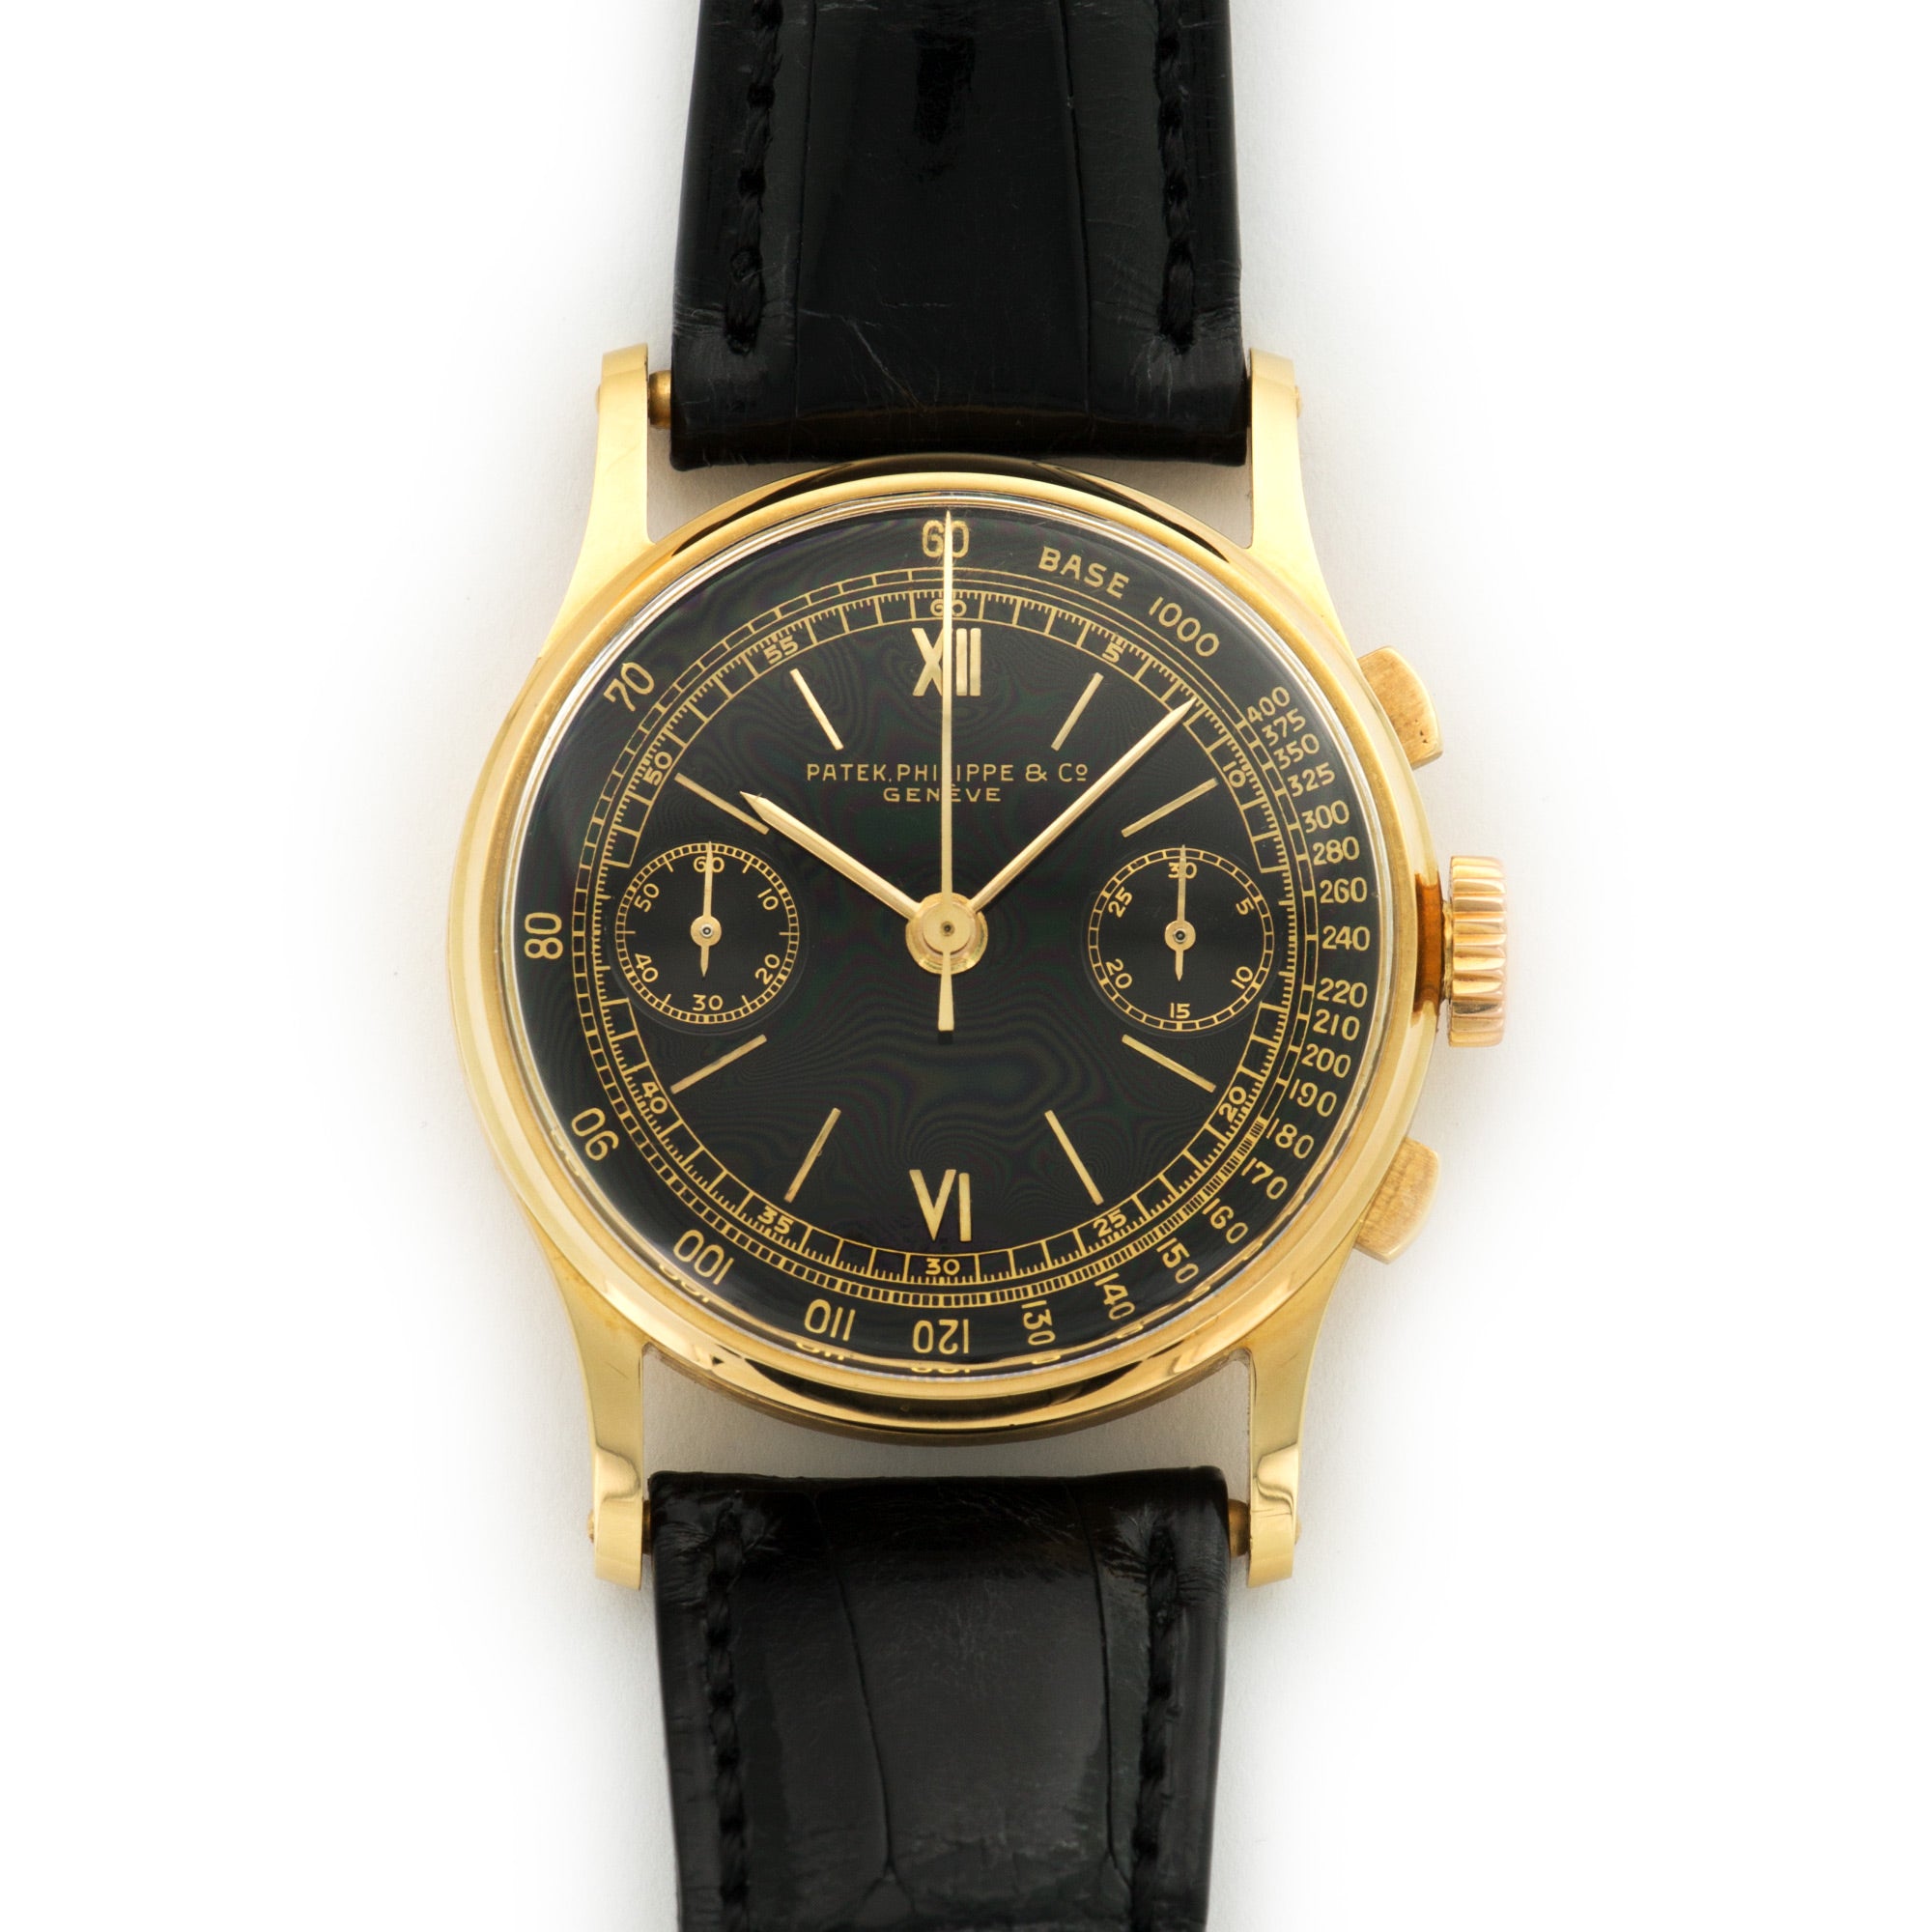 Patek Philippe - Patek Philippe Yellow Gold Chronograph Watch Ref. 130 - The Keystone Watches